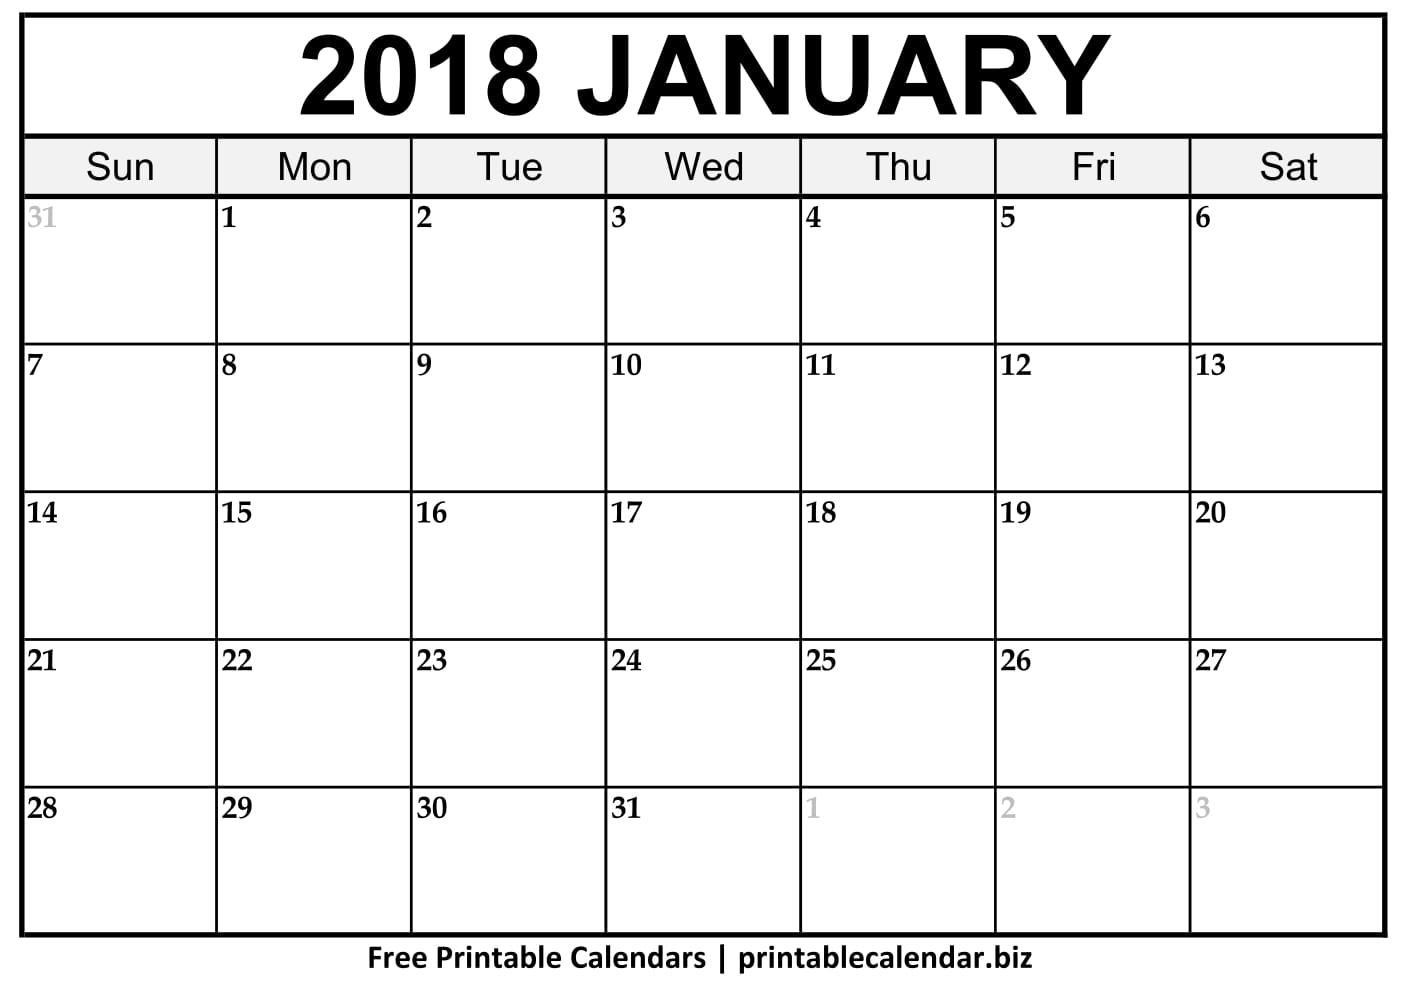 2019 Printable Calendar Templates - Printablecalendar.biz within Free Blank Calendar Templates To Print